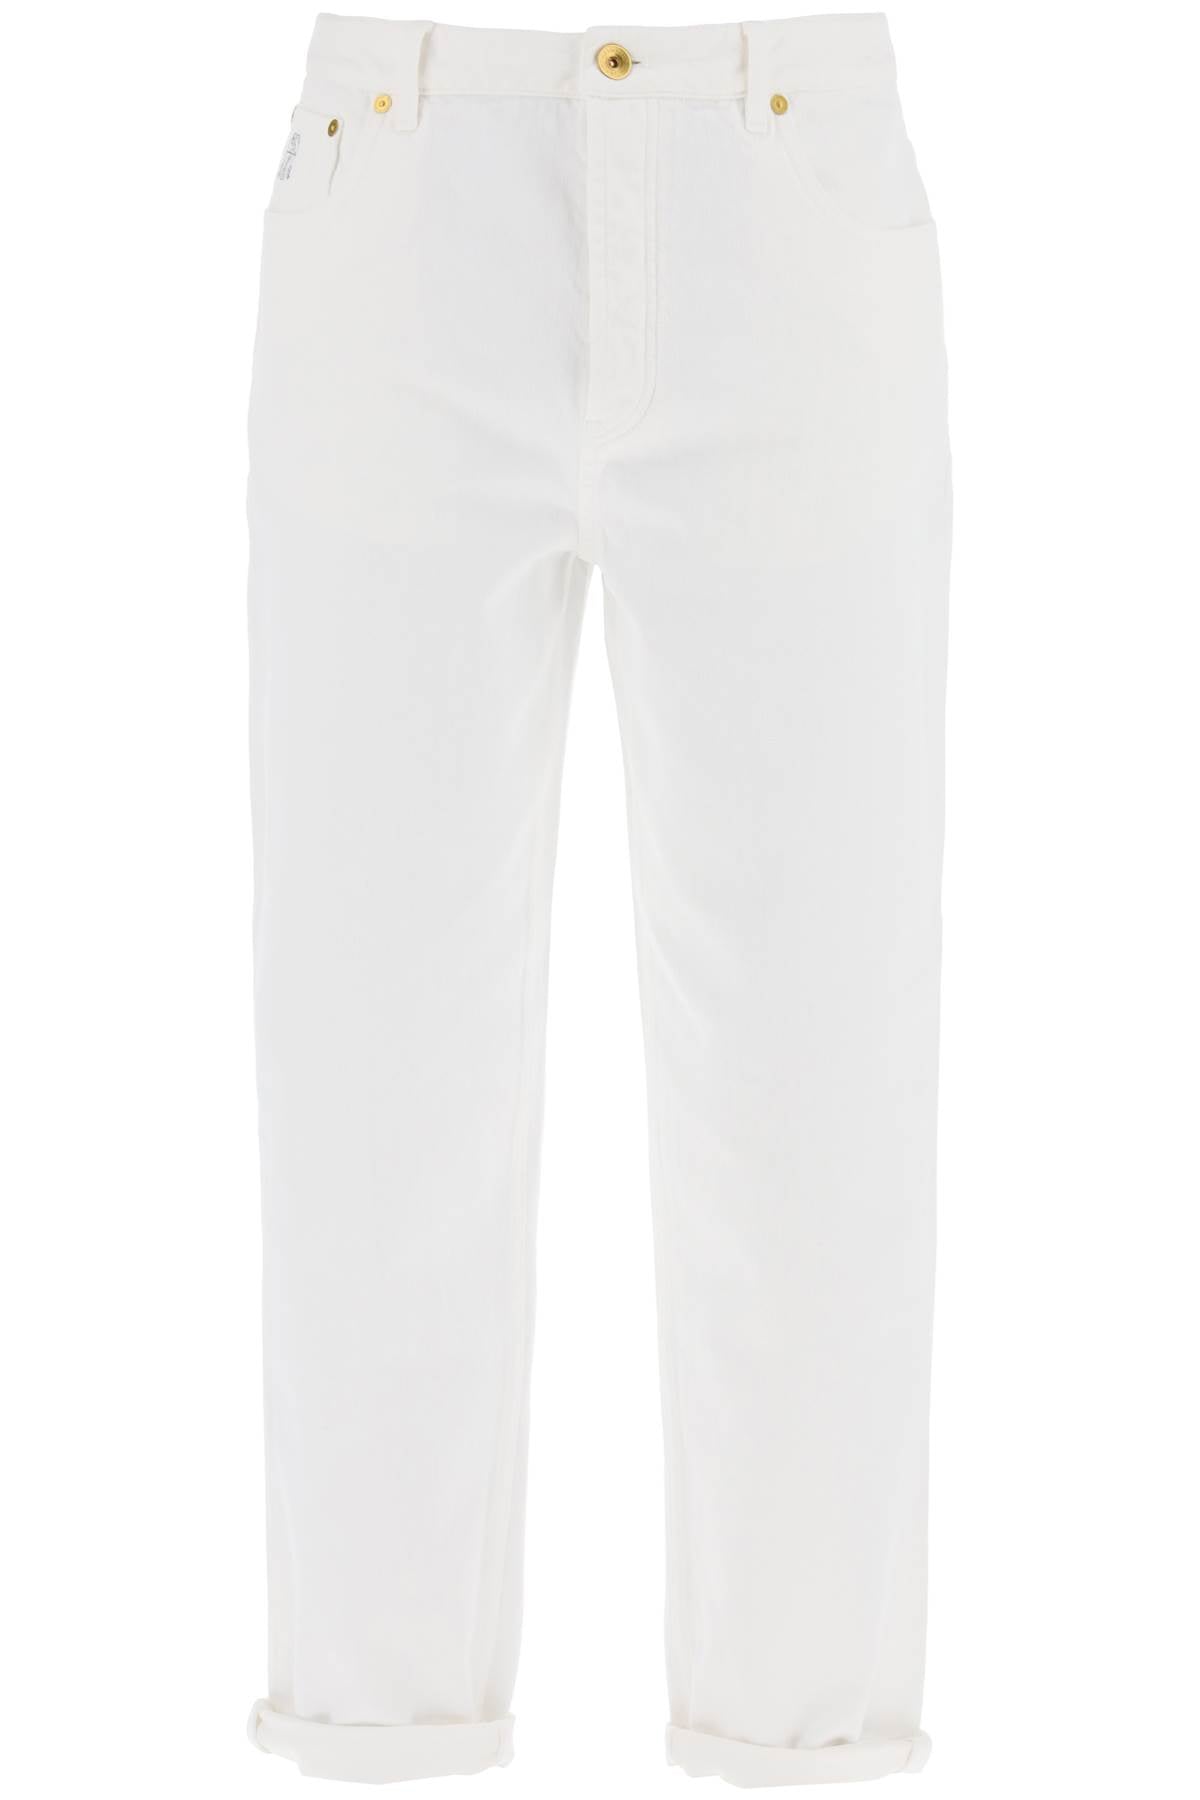 Shop Brunello Cucinelli Men's White Overdyed Denim Jeans